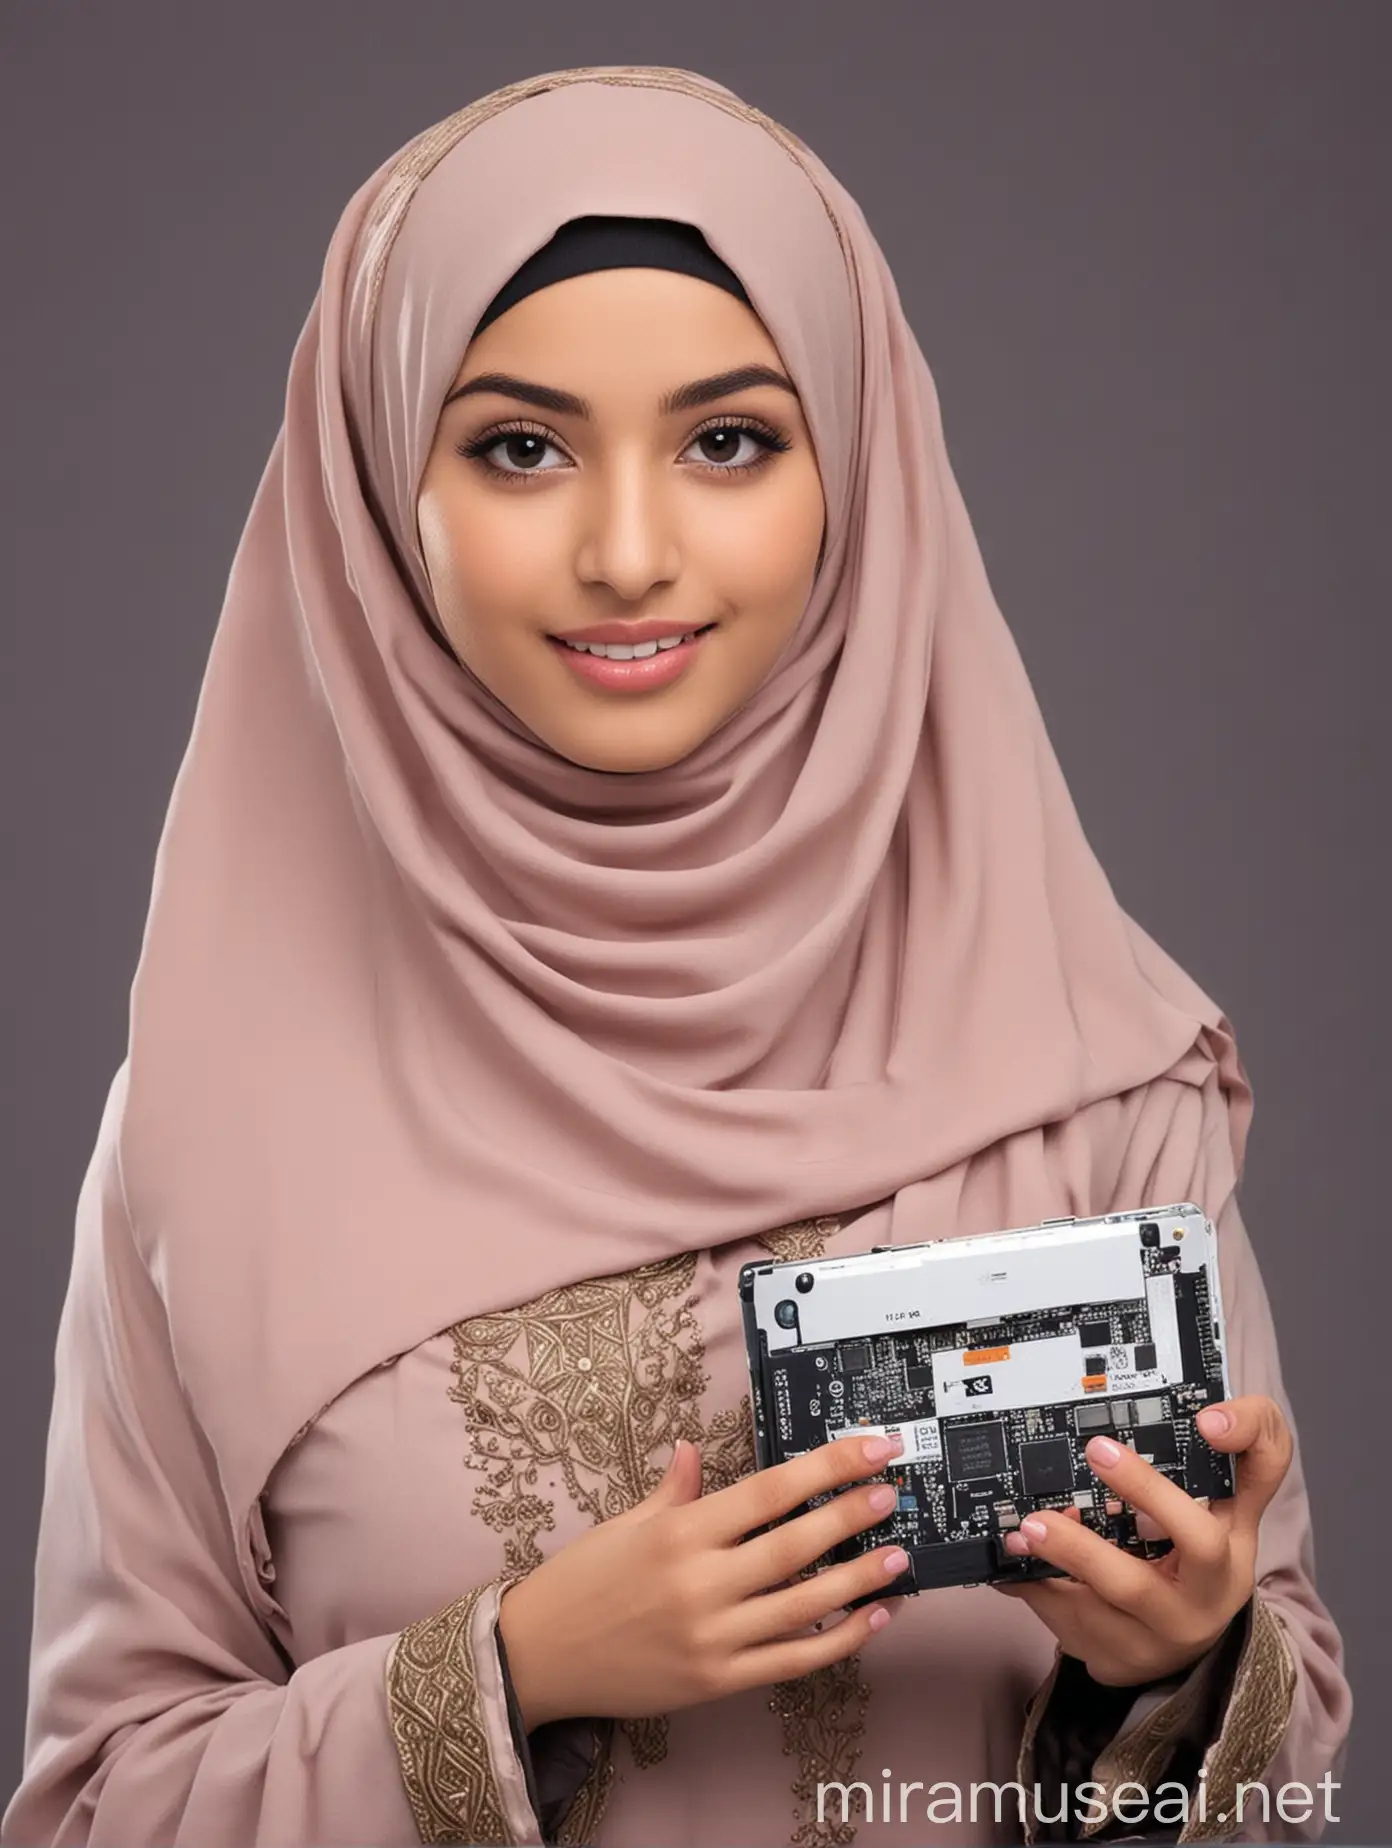 Beautiful Muslim Woman Selling Electronics Devices